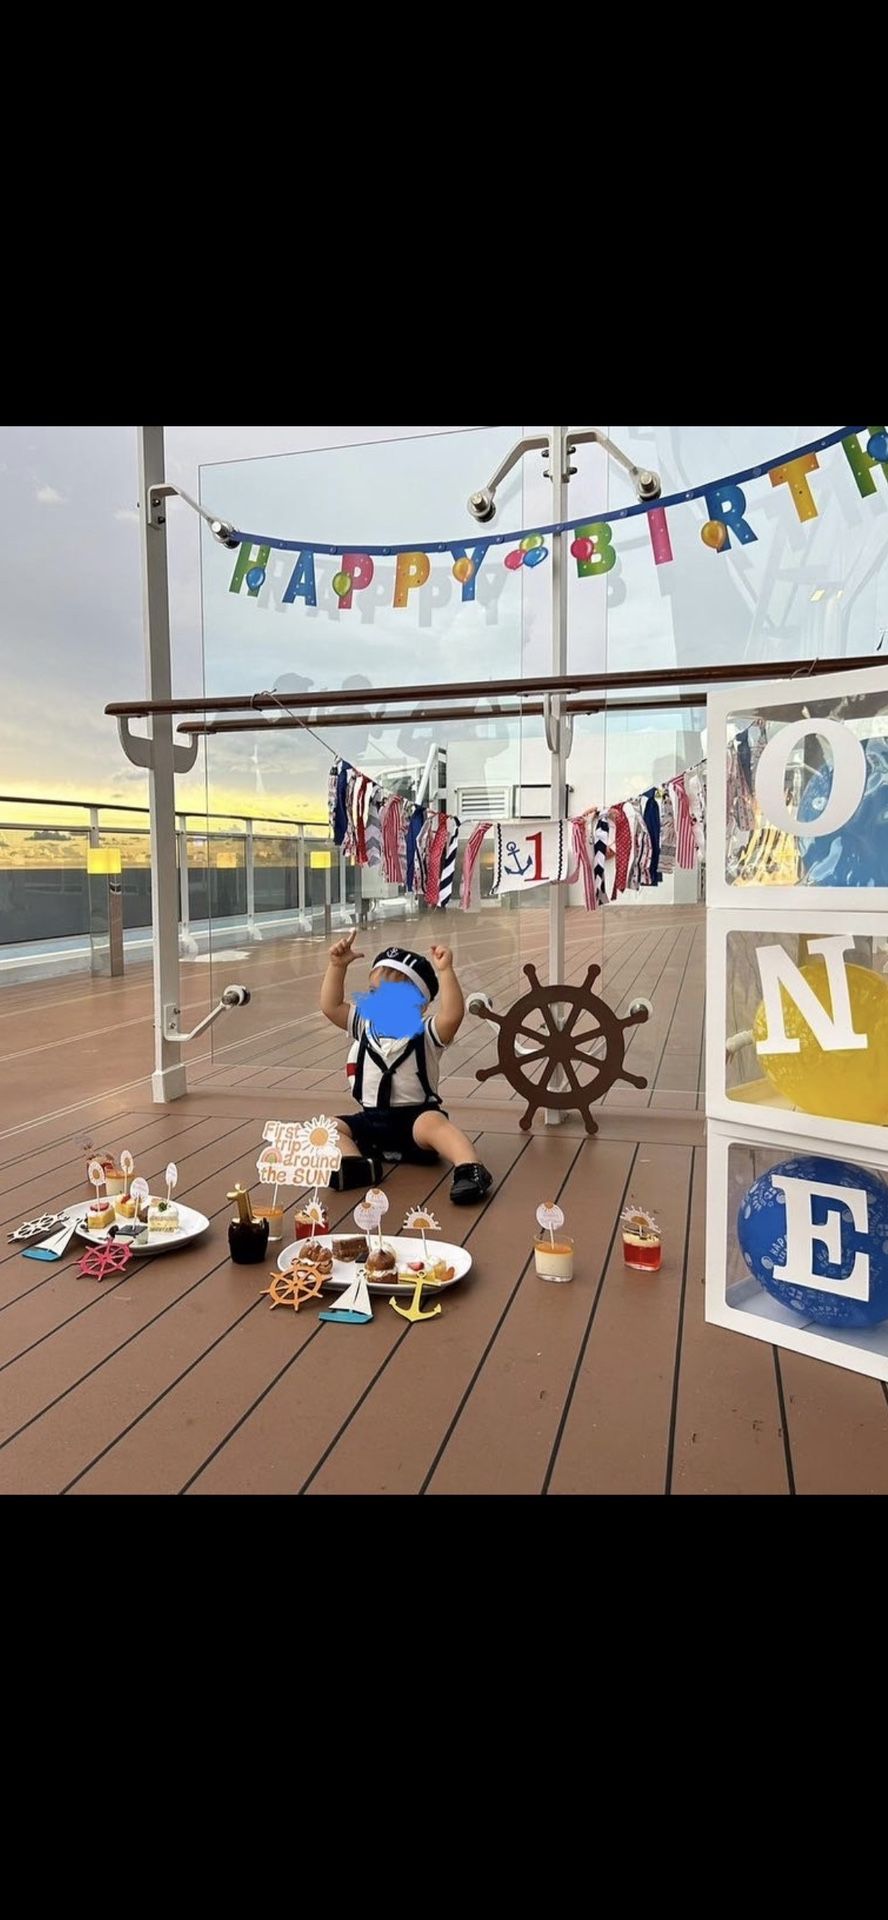 Birthday Decor - Nautical Theme Costume And Decor